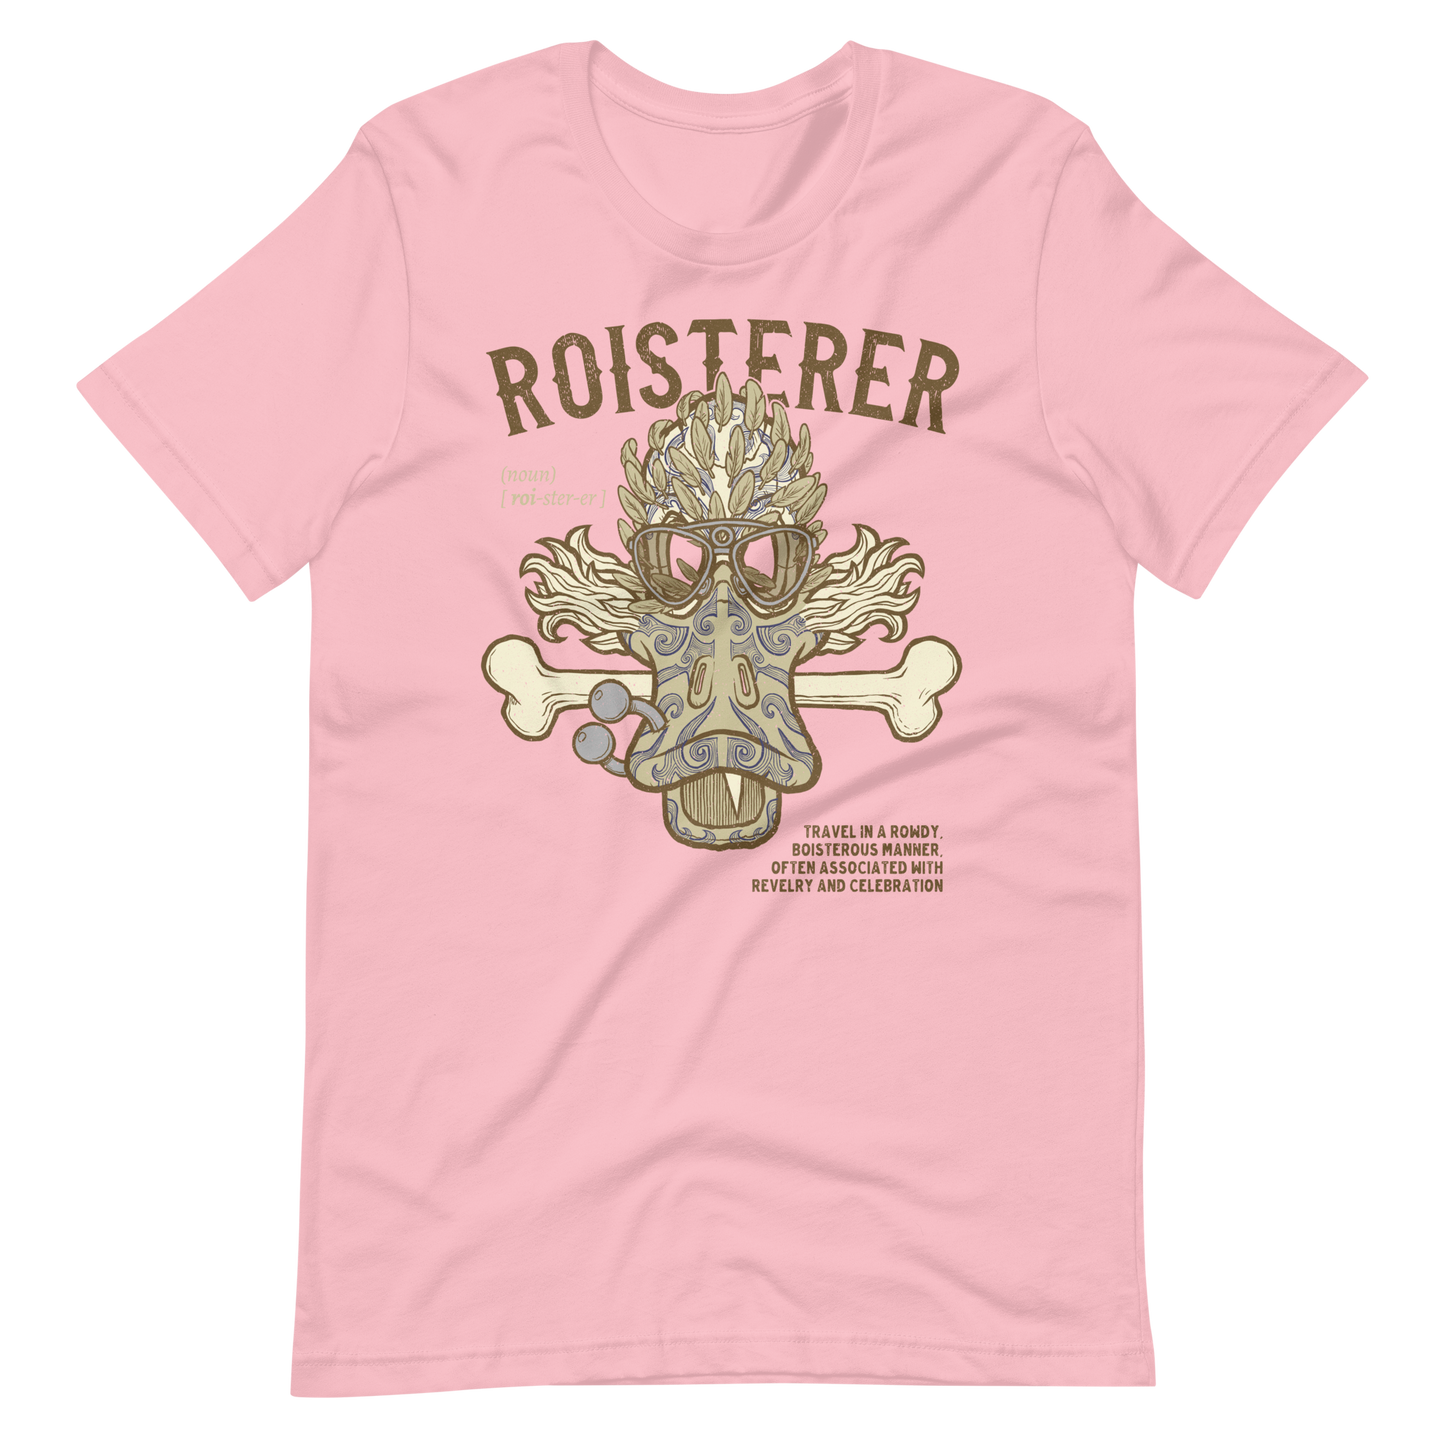 Pink Roister Motorcycle T-shirt Cerlebration Biker Shirt Tourer Travel Shirt Gift For Biker Traveling Gear Motorcycle Road Trip Shirt Biker Gear